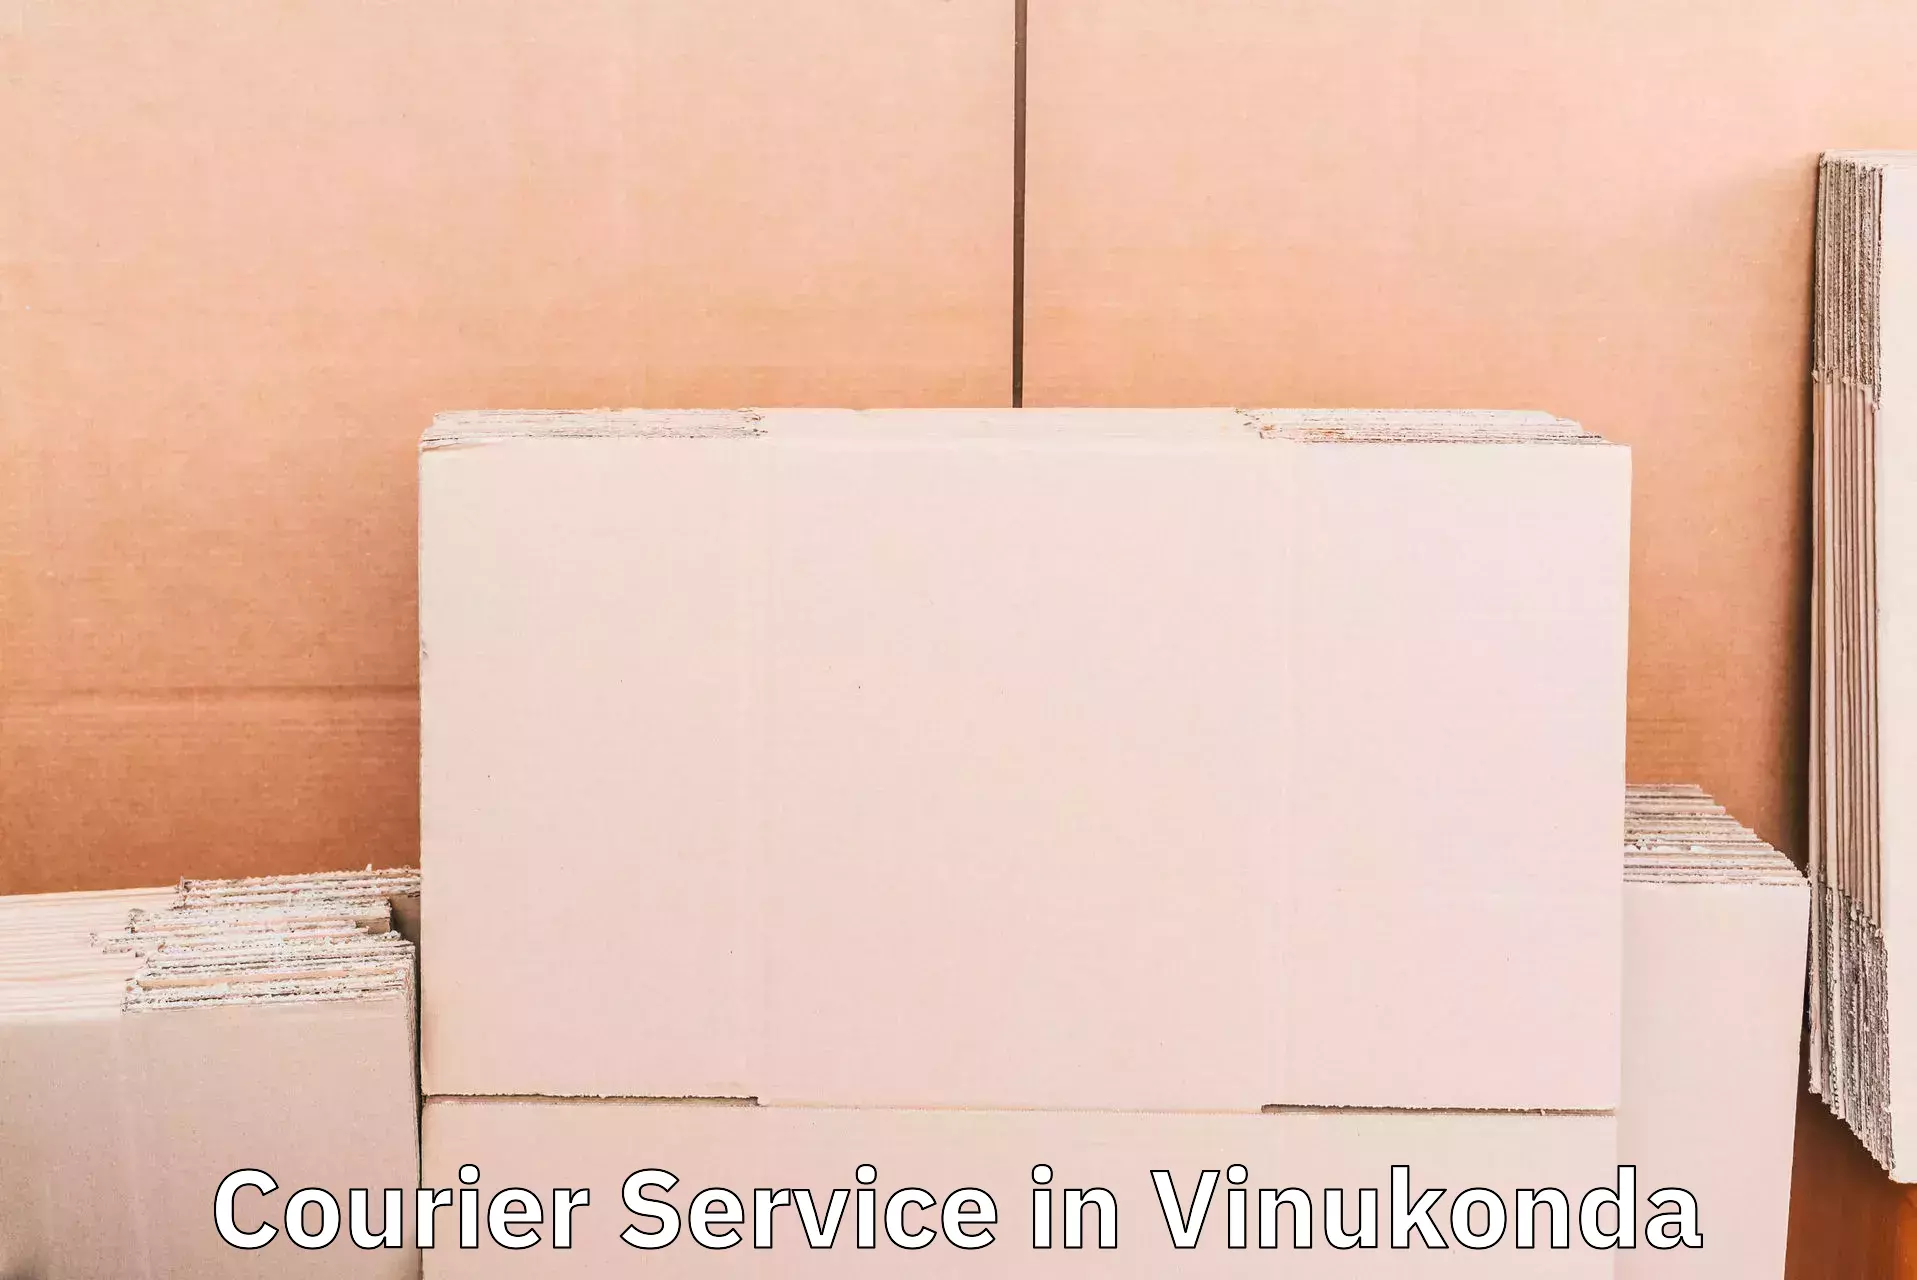 Courier service partnerships in Vinukonda